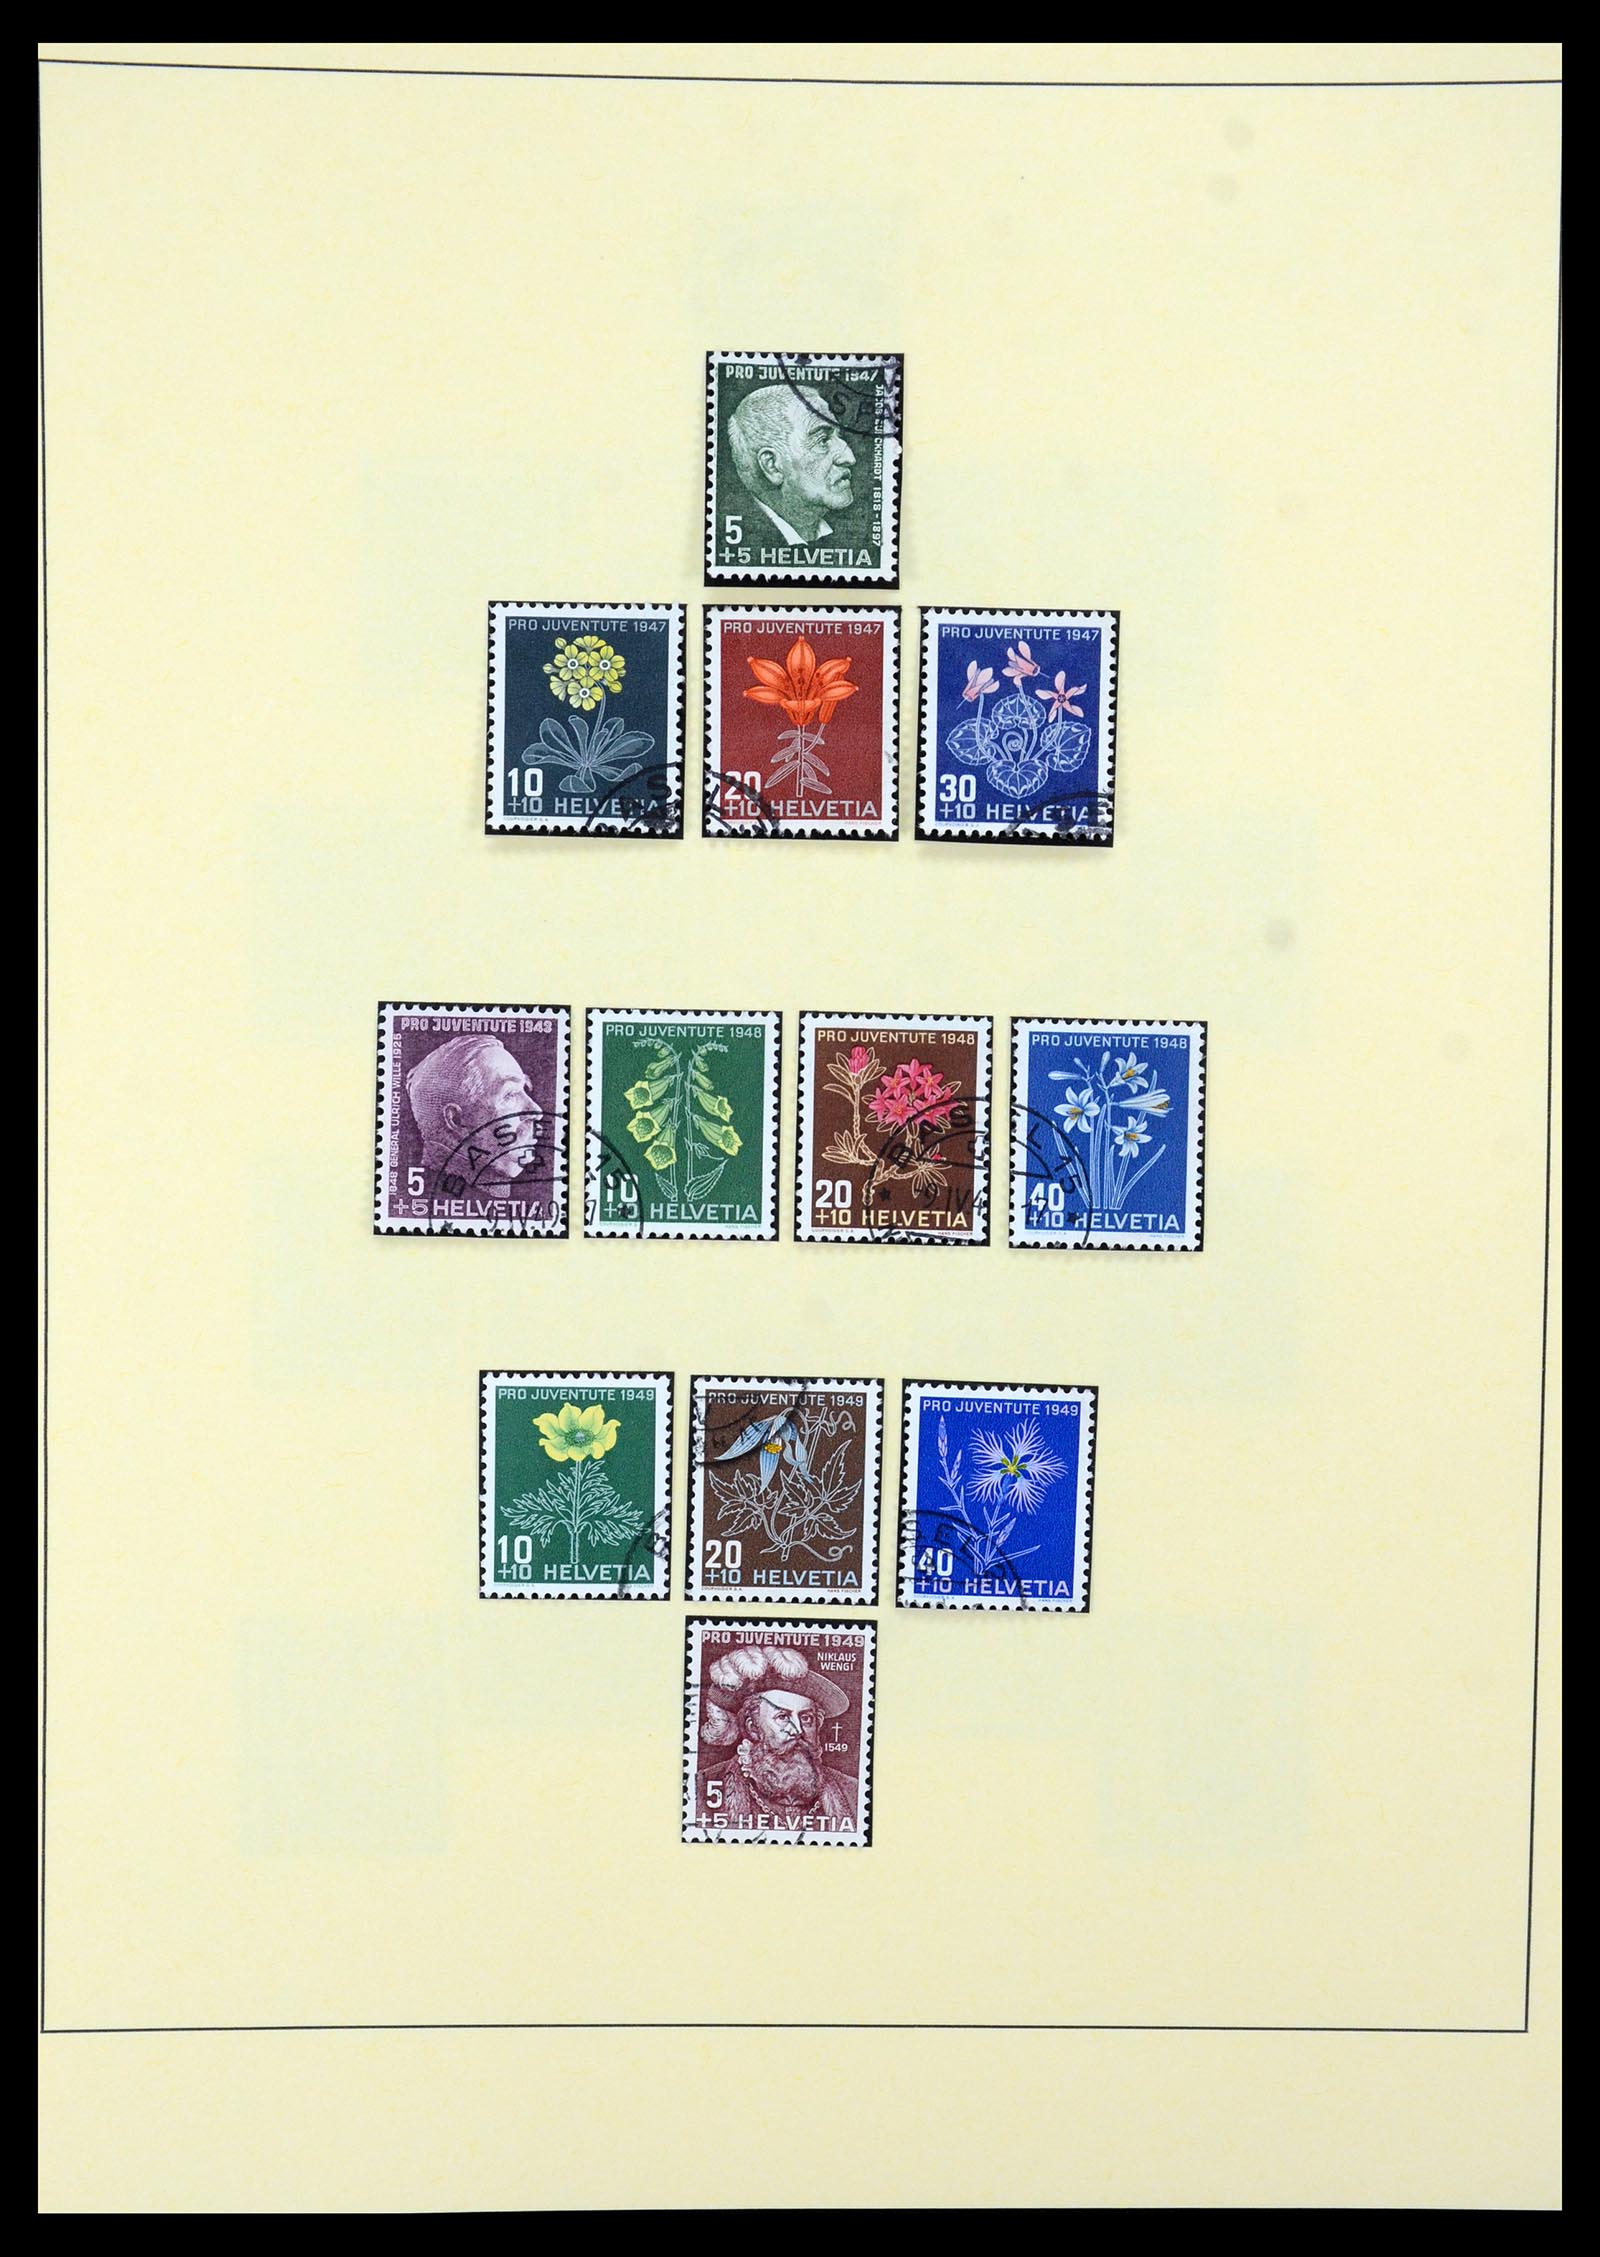 35668 008 - Stamp Collection 35668 Switzerland Pro Juventute and Pro Patria 1910-197